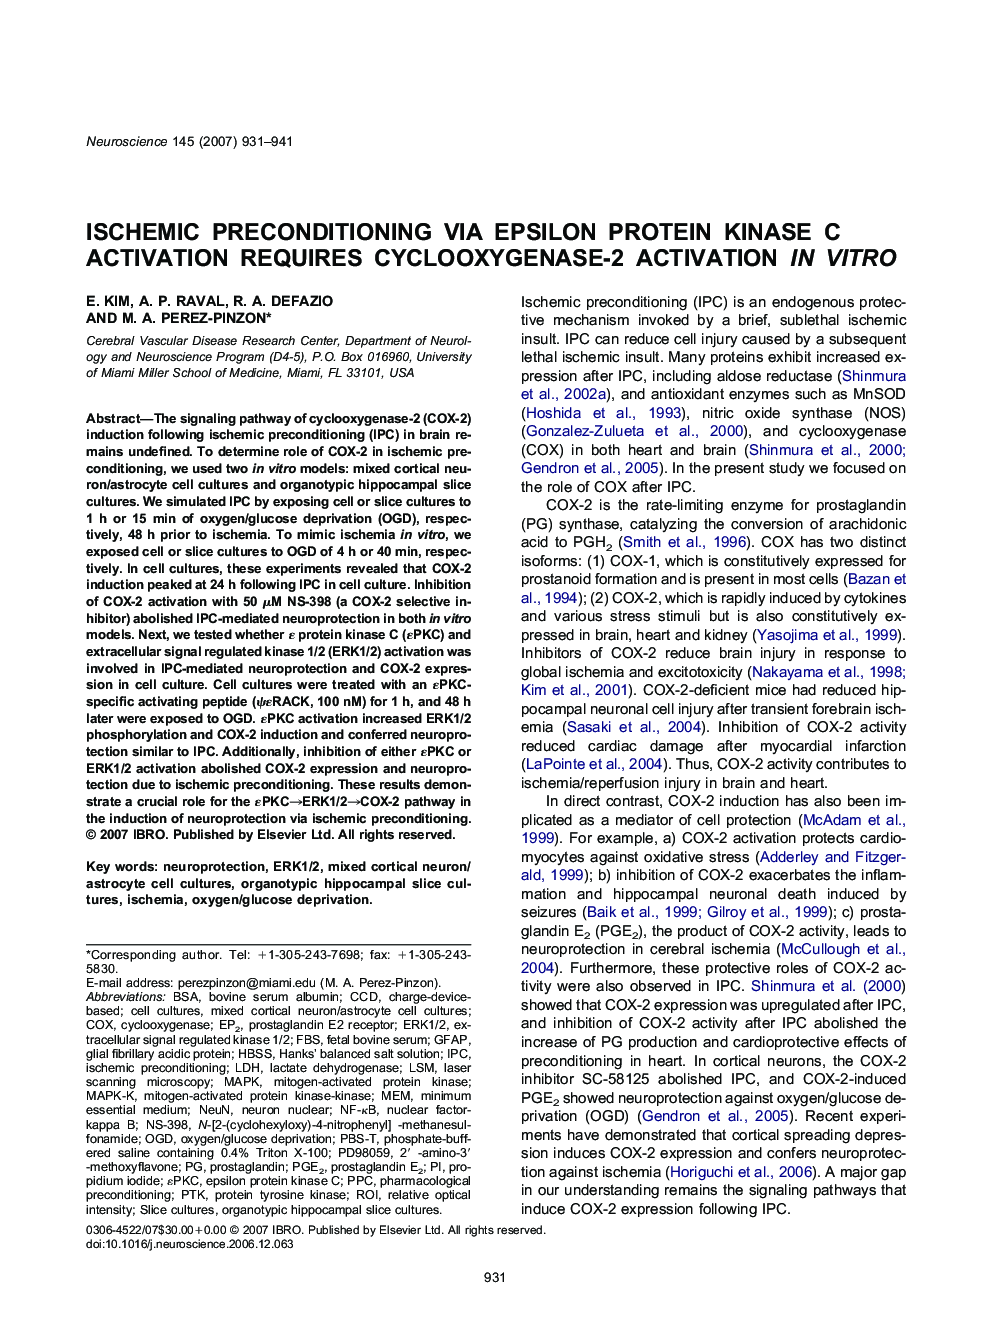 Ischemic preconditioning via epsilon protein kinase C activation requires cyclooxygenase-2 activation in vitro